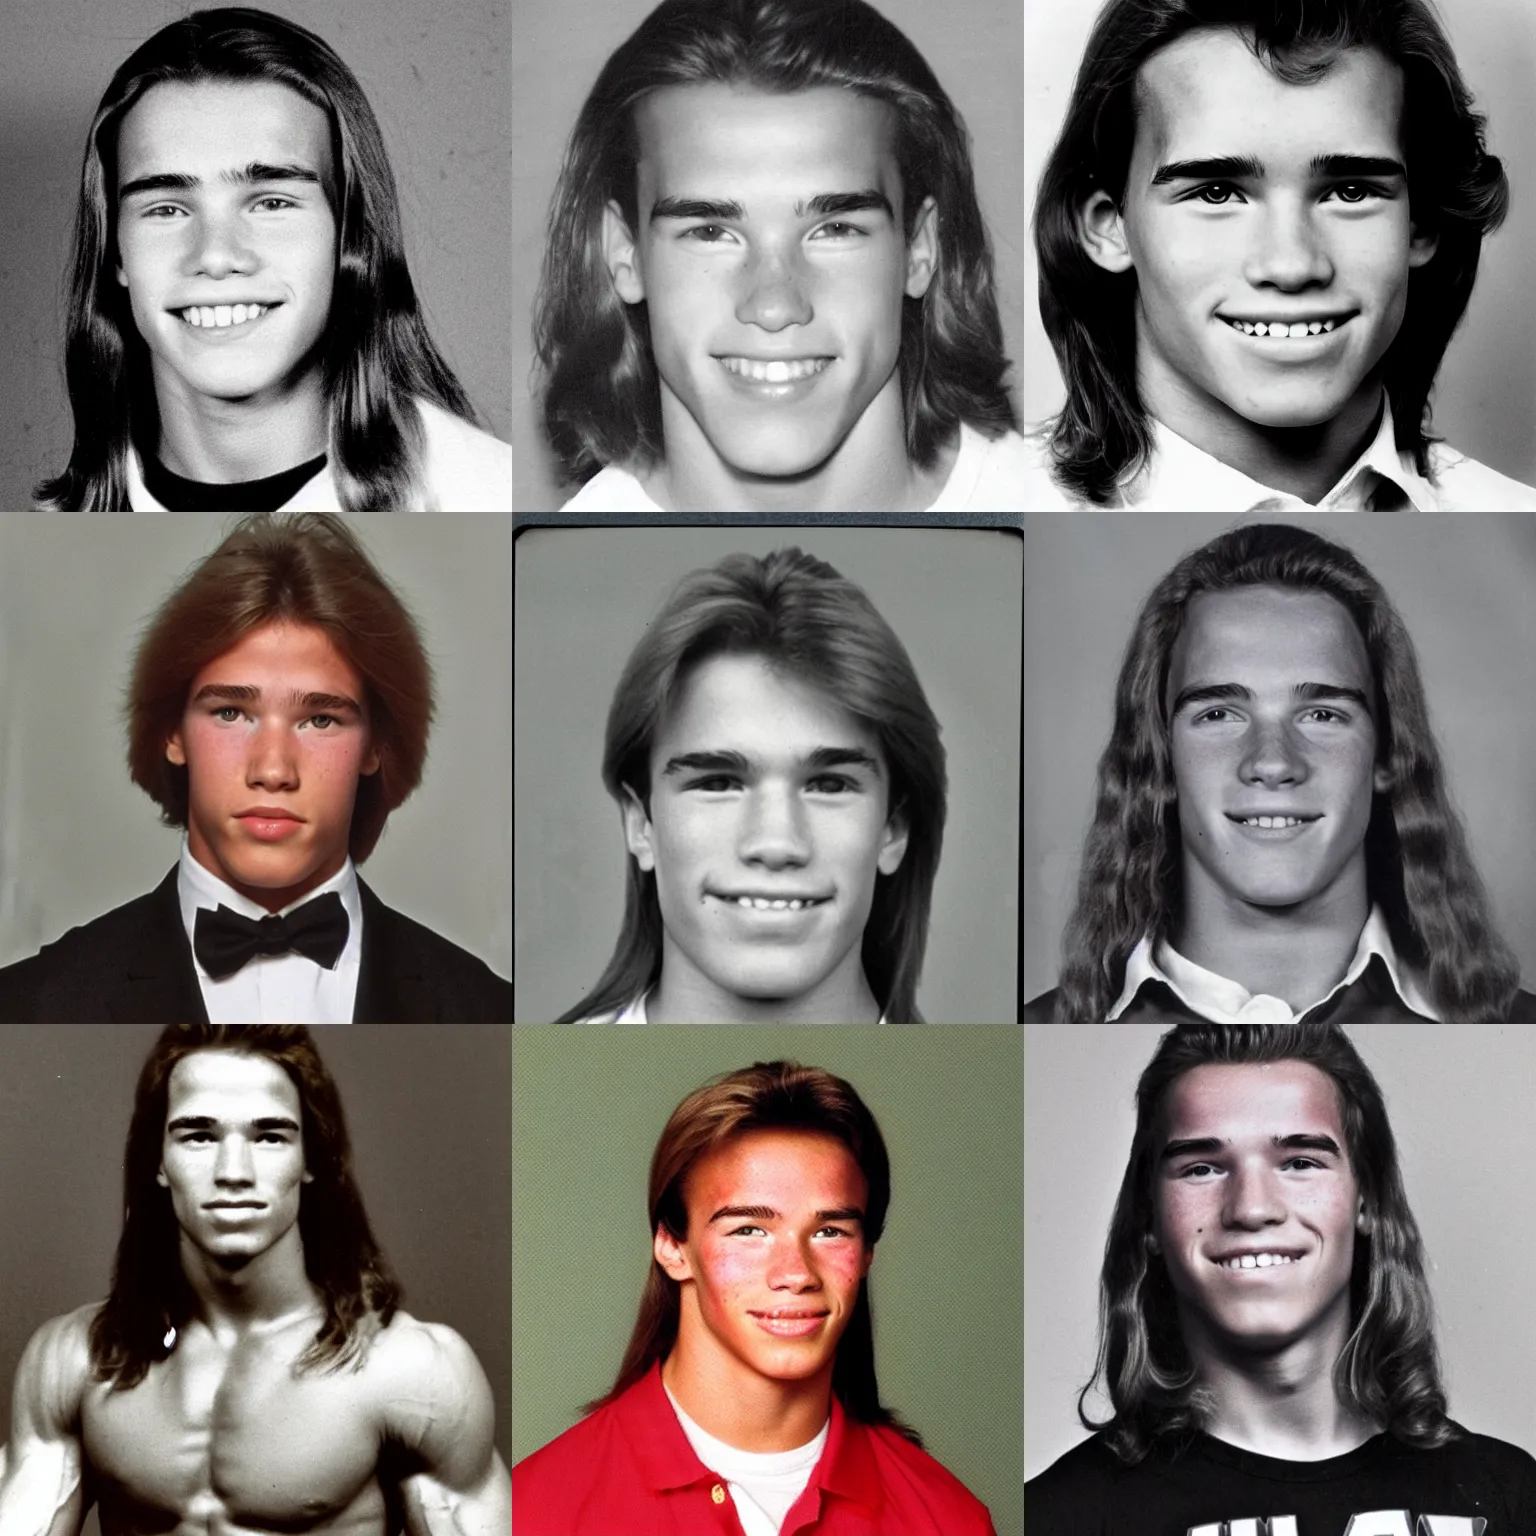 Patrick Schwarzenegger Transformation Photos Then and Now